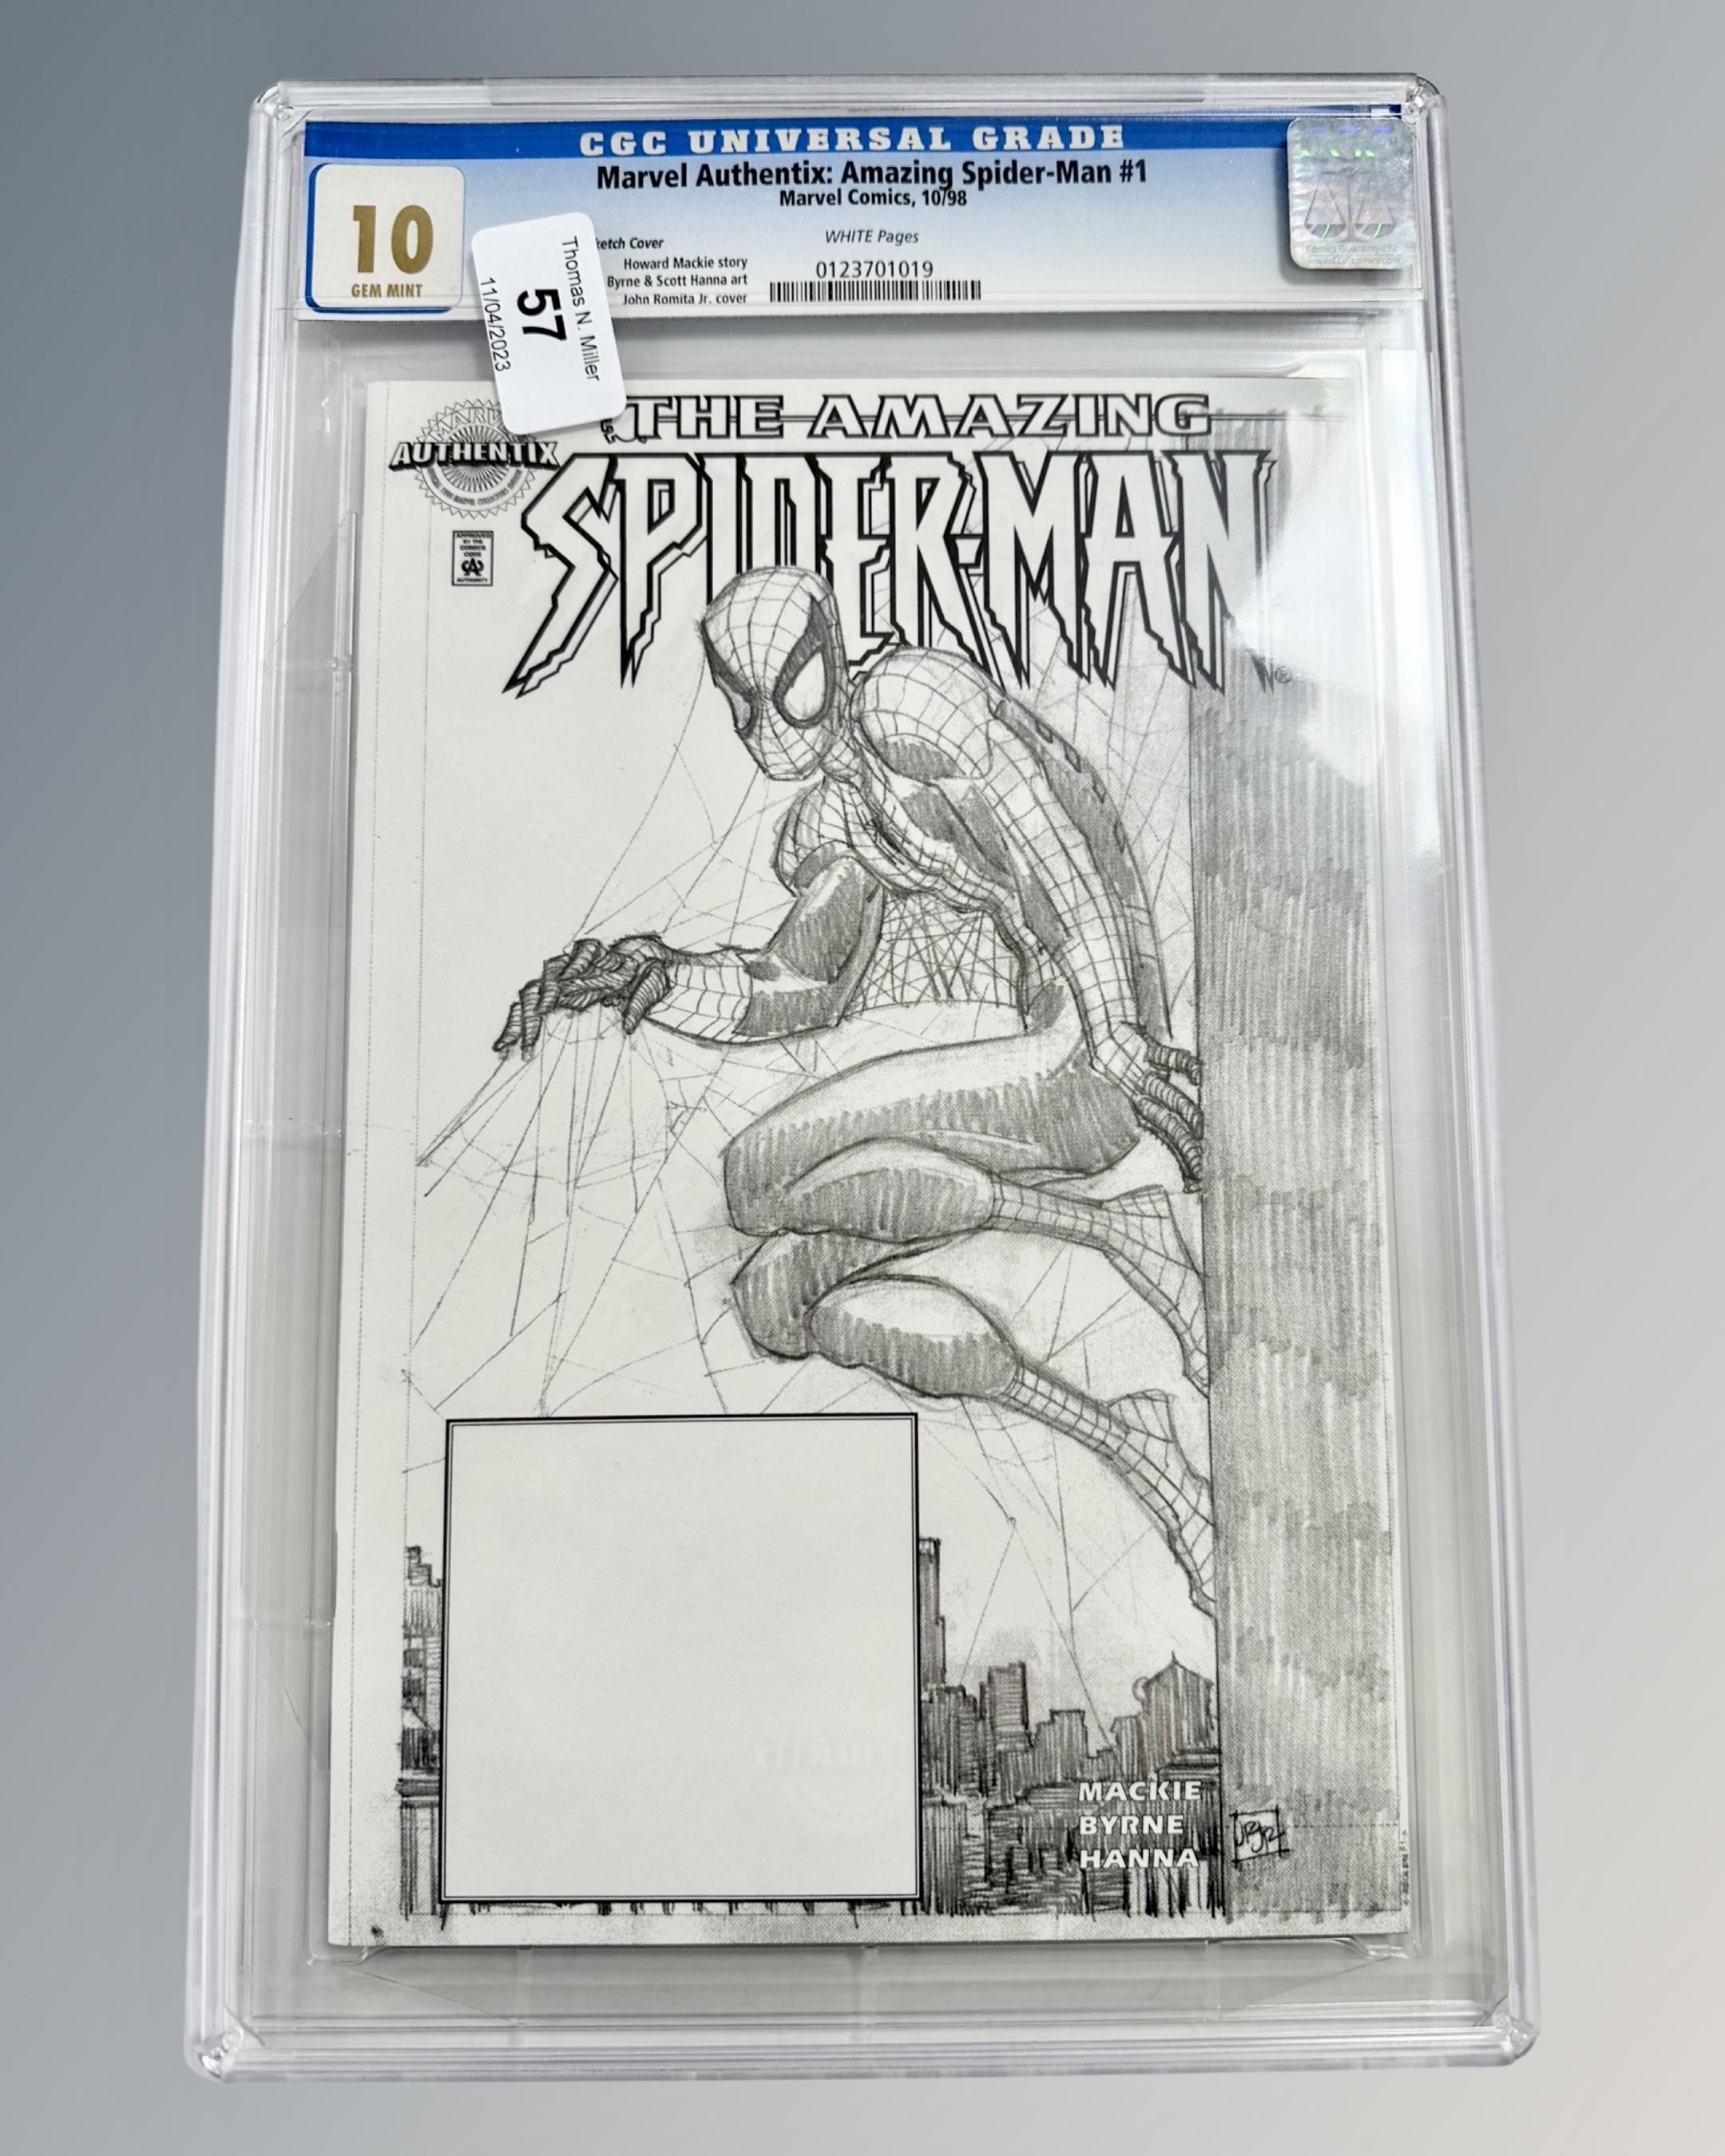 Marvel Comics - Marvel Authentix: Amazing Spider-Man #1, CGC Universal Grade 10, slabbed.